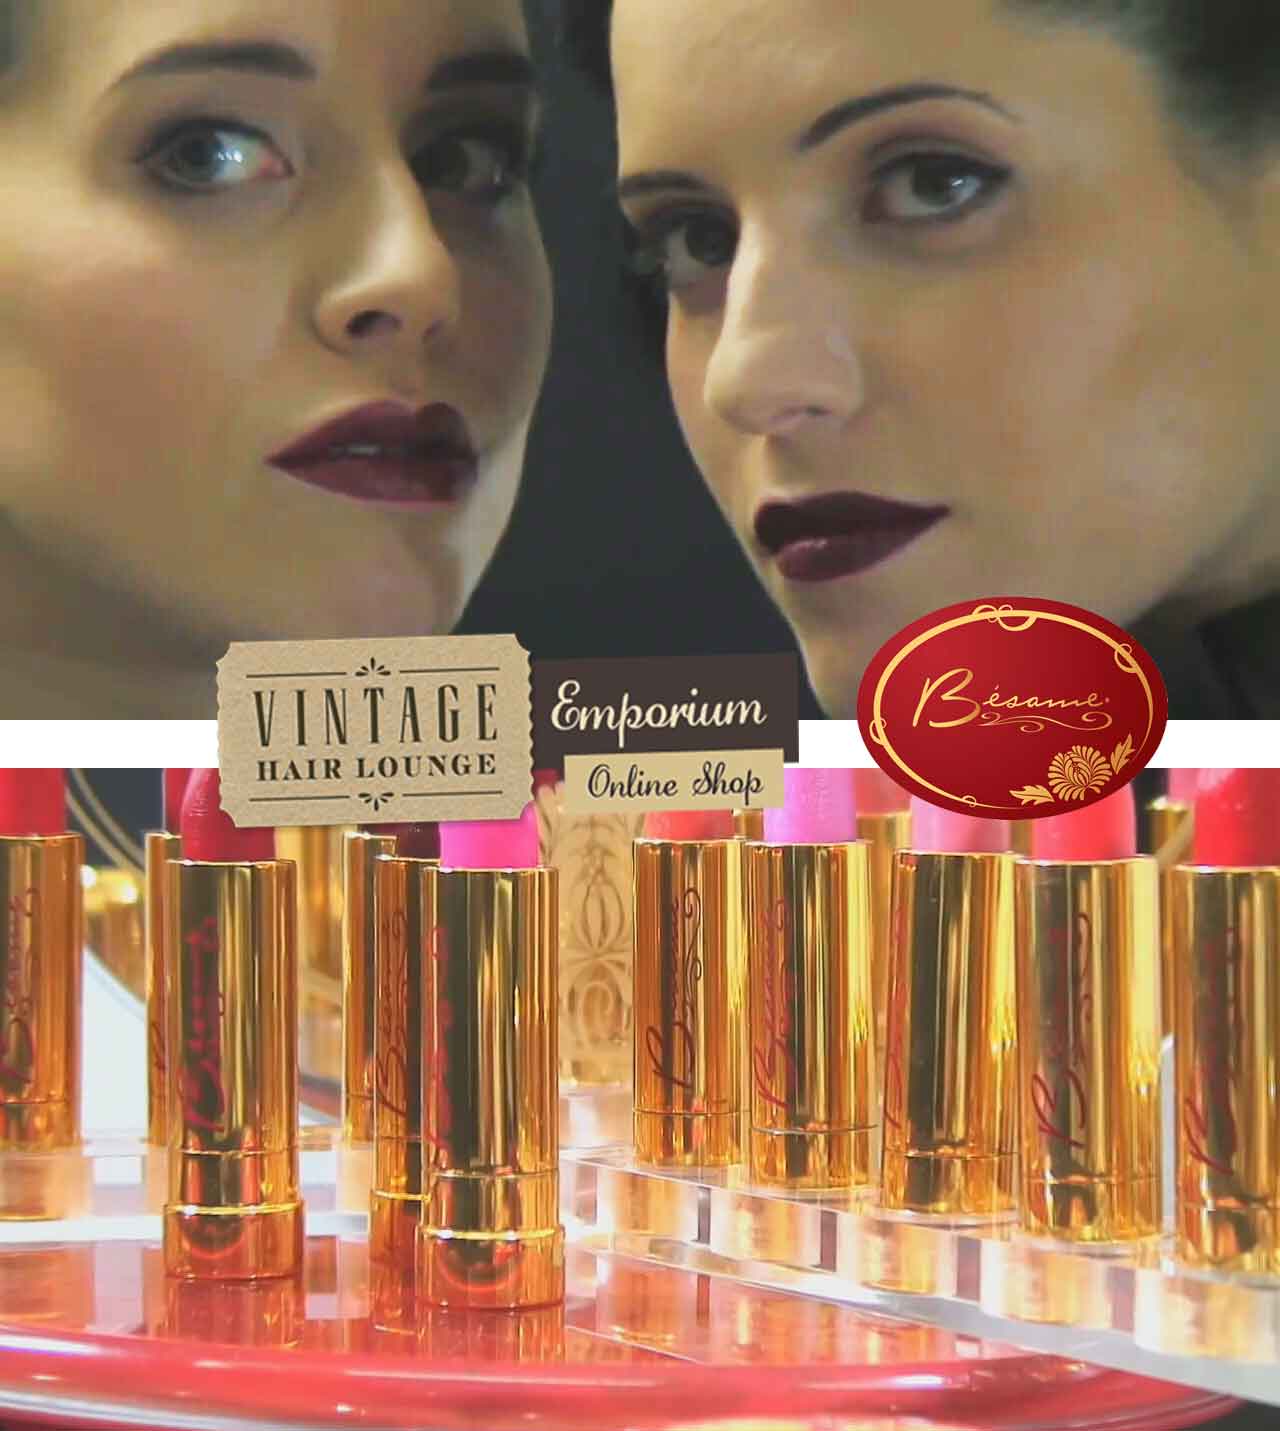 Besame Cosmetics - Fab Red Lipstick Video Showcase - Glamour Daze